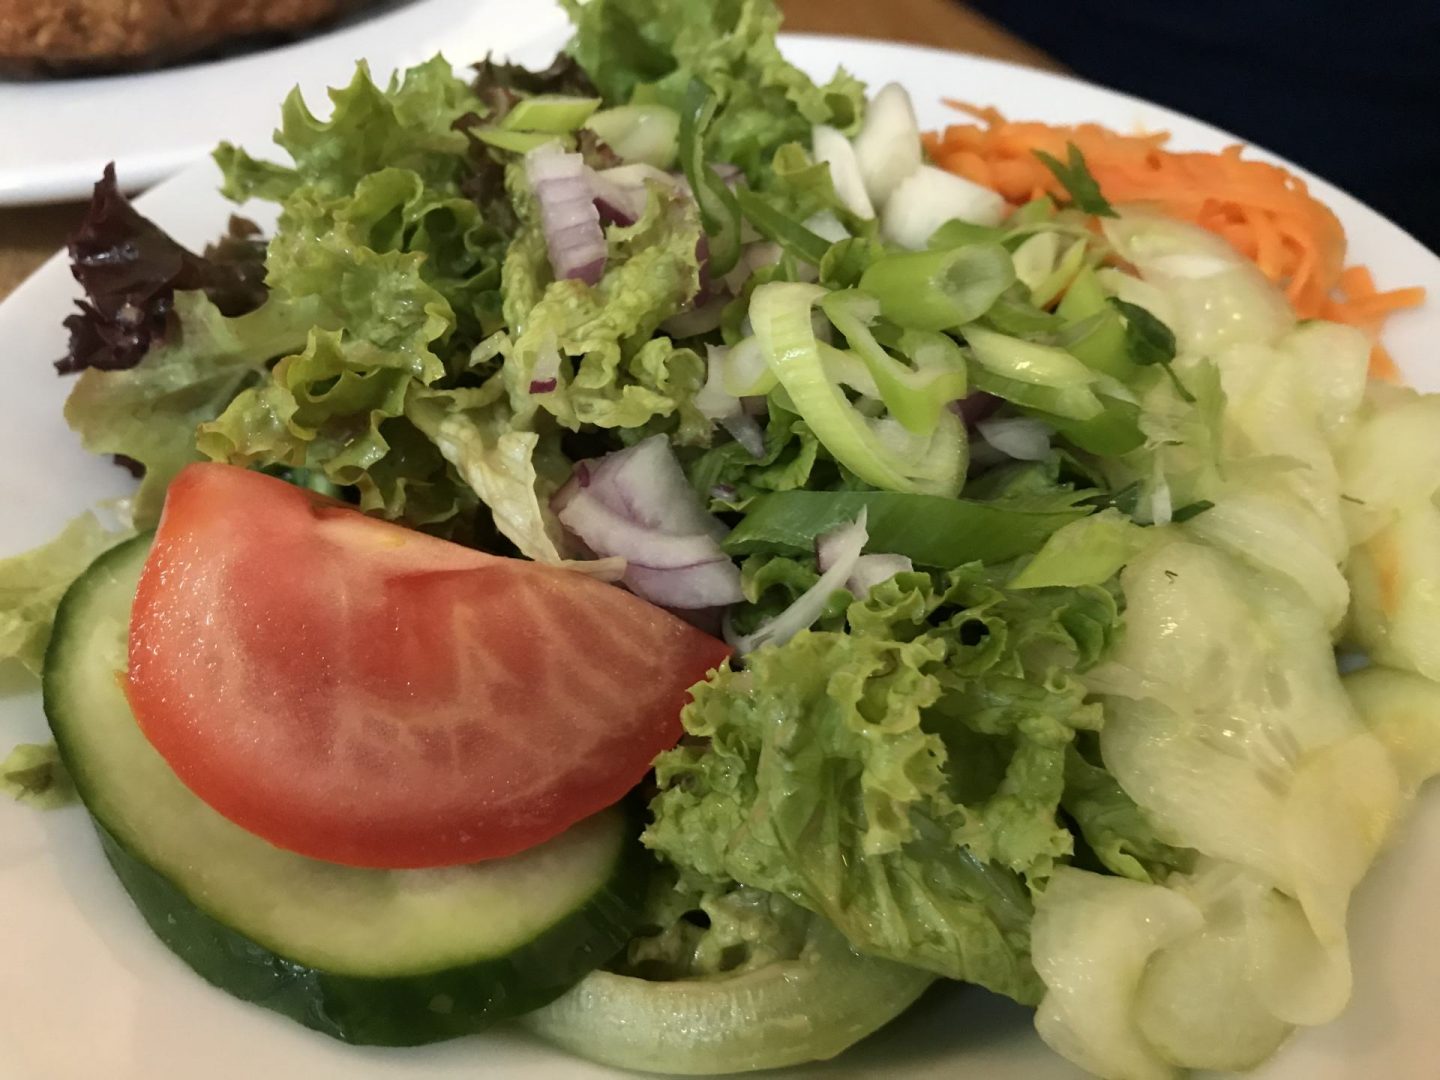 Erfahrung Bewertung Kritik Grüner Brauhaus Fürth Salat Foodblog Sternestulle